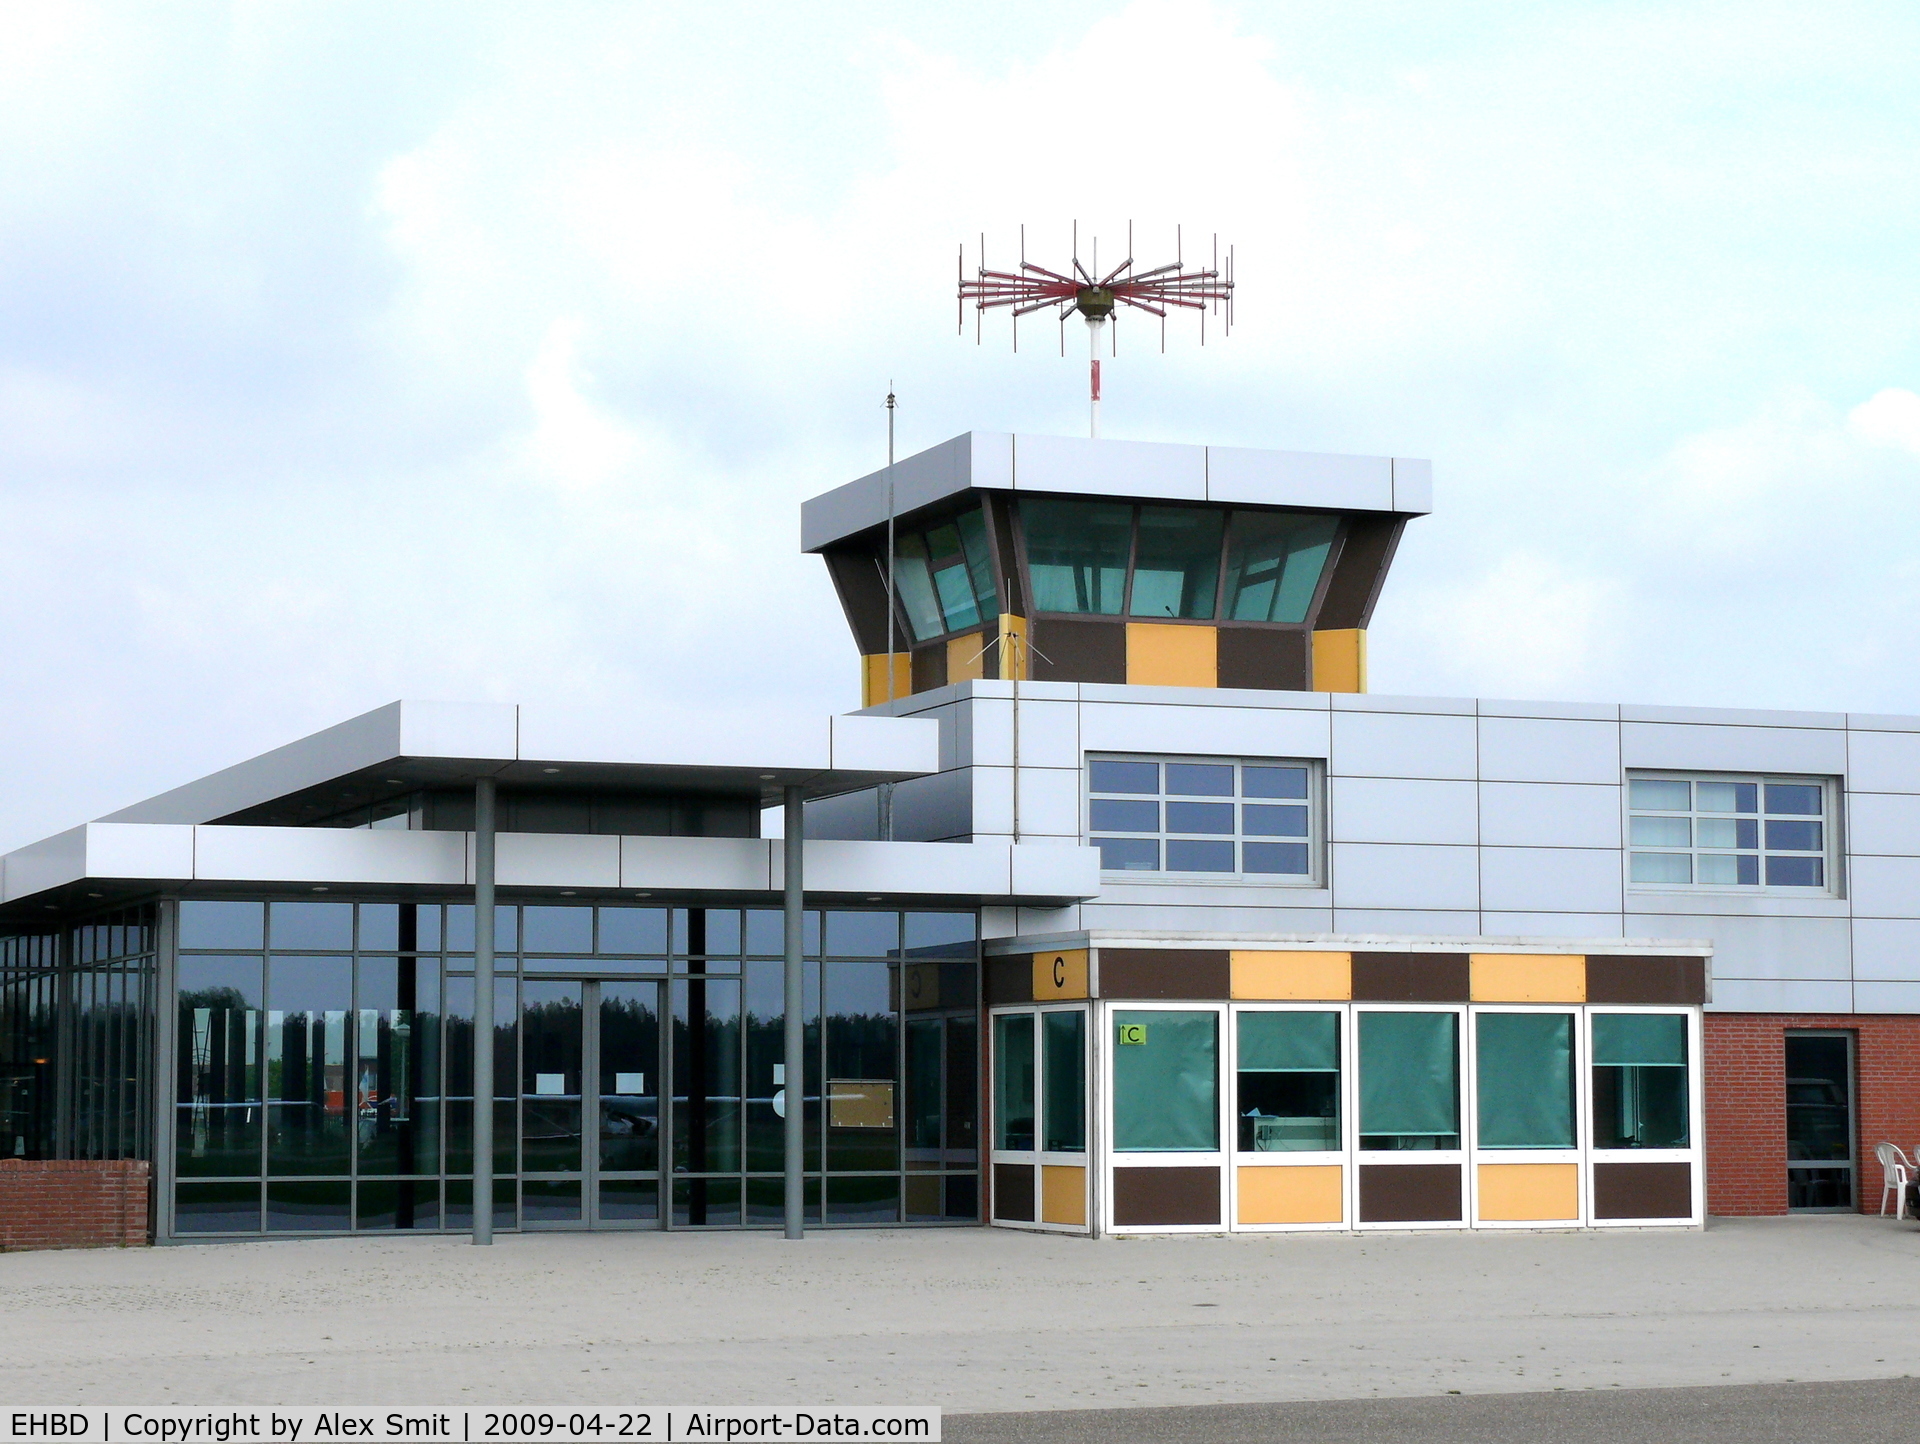 Budel Airport, Weert Netherlands (EHBD) - Tower @ Budel Kempen Airport